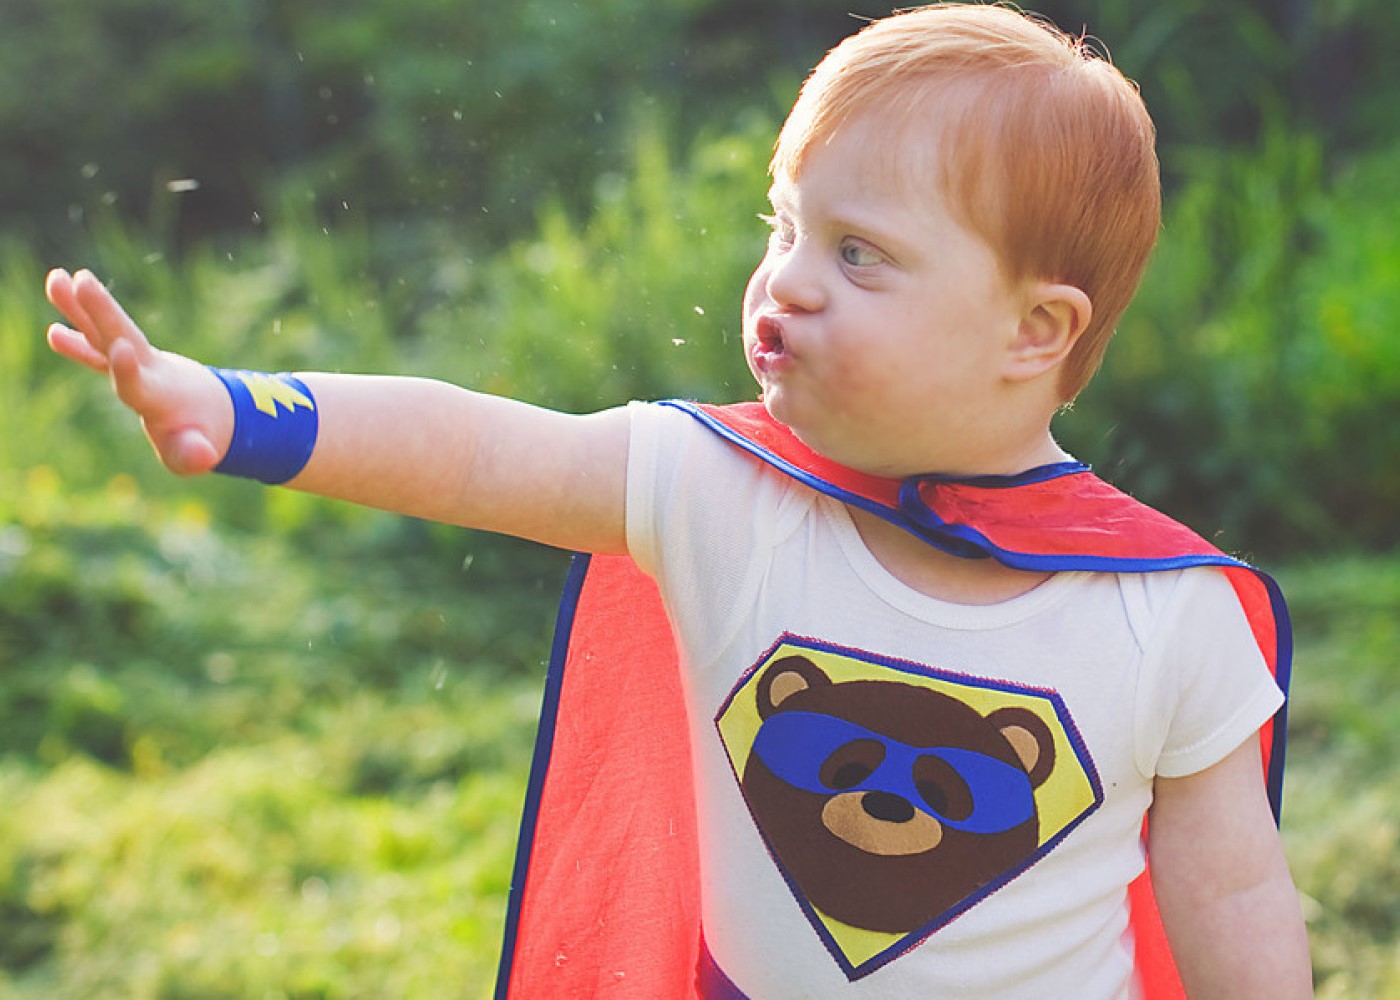 'The Superhero Project': Special Needs Boy dressed as Superhero